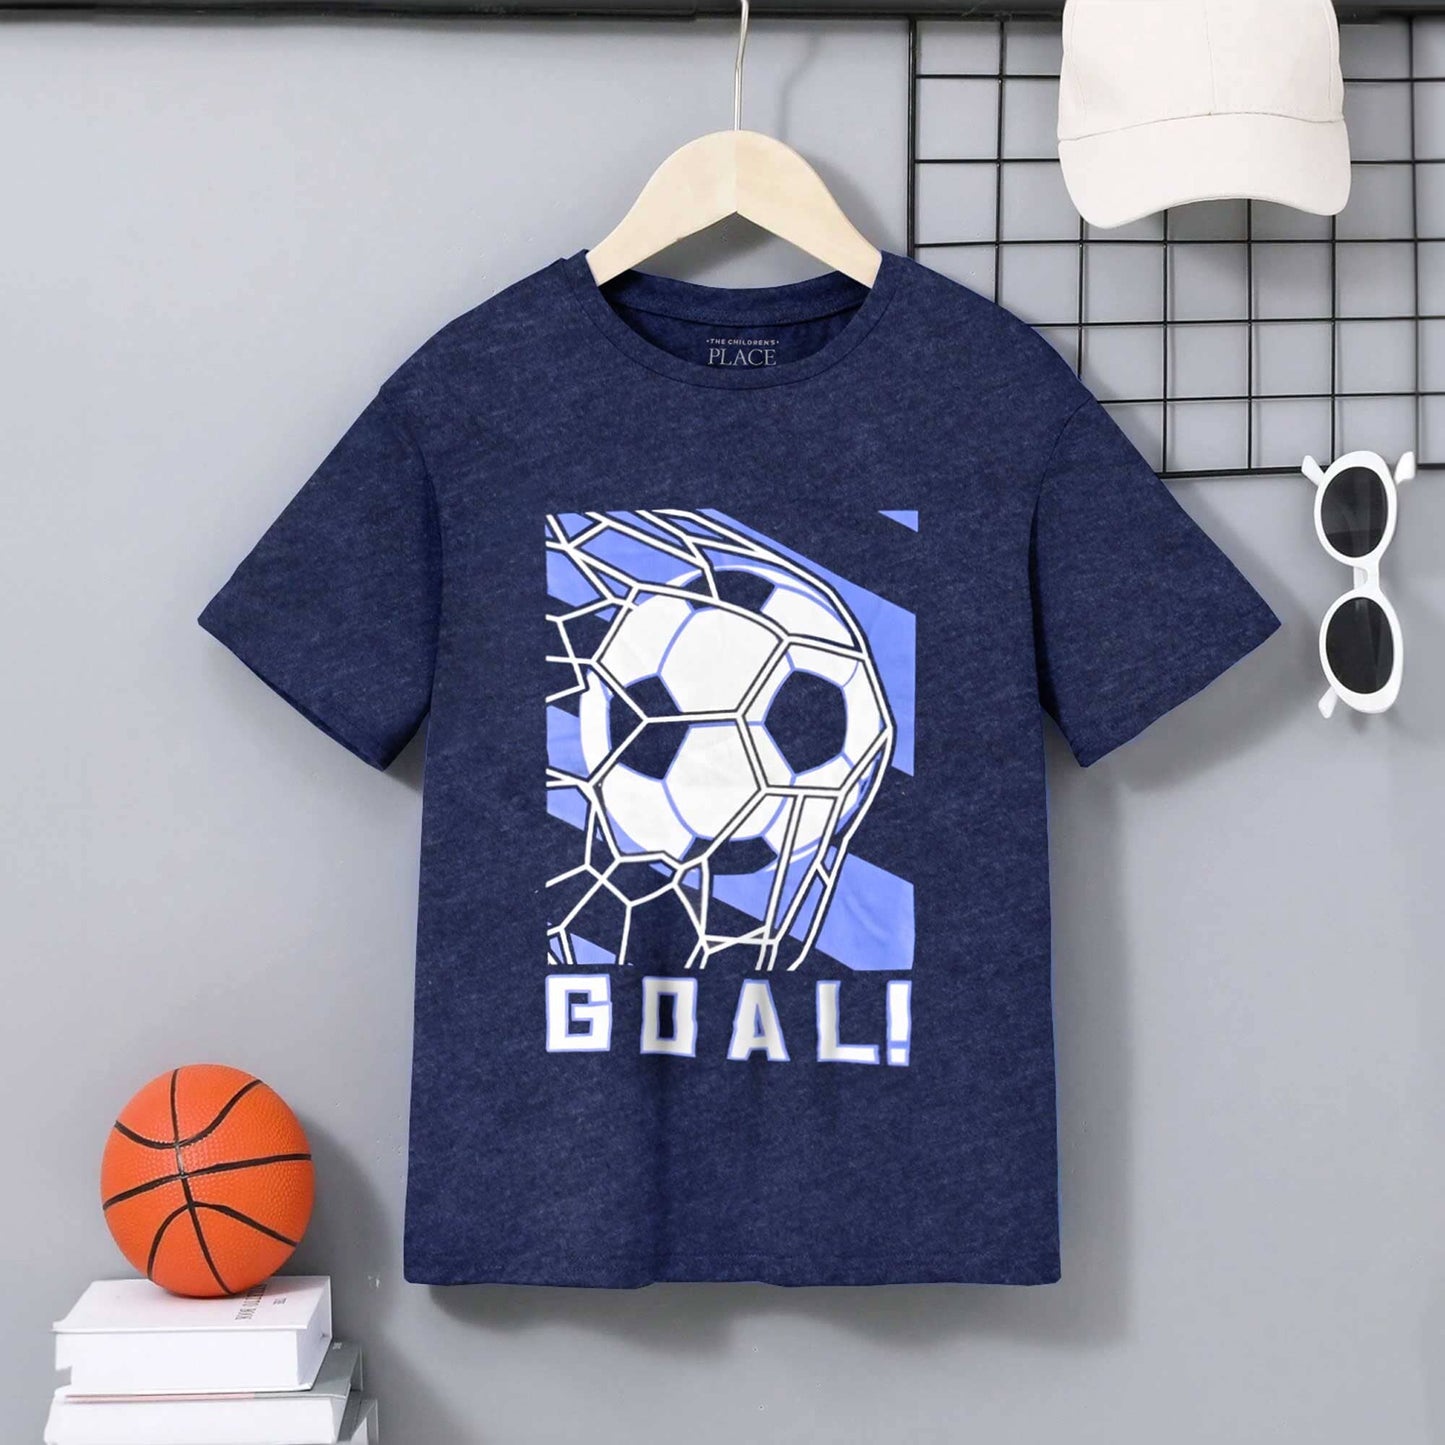 Place Boy's Goal Printed Tee Shirt